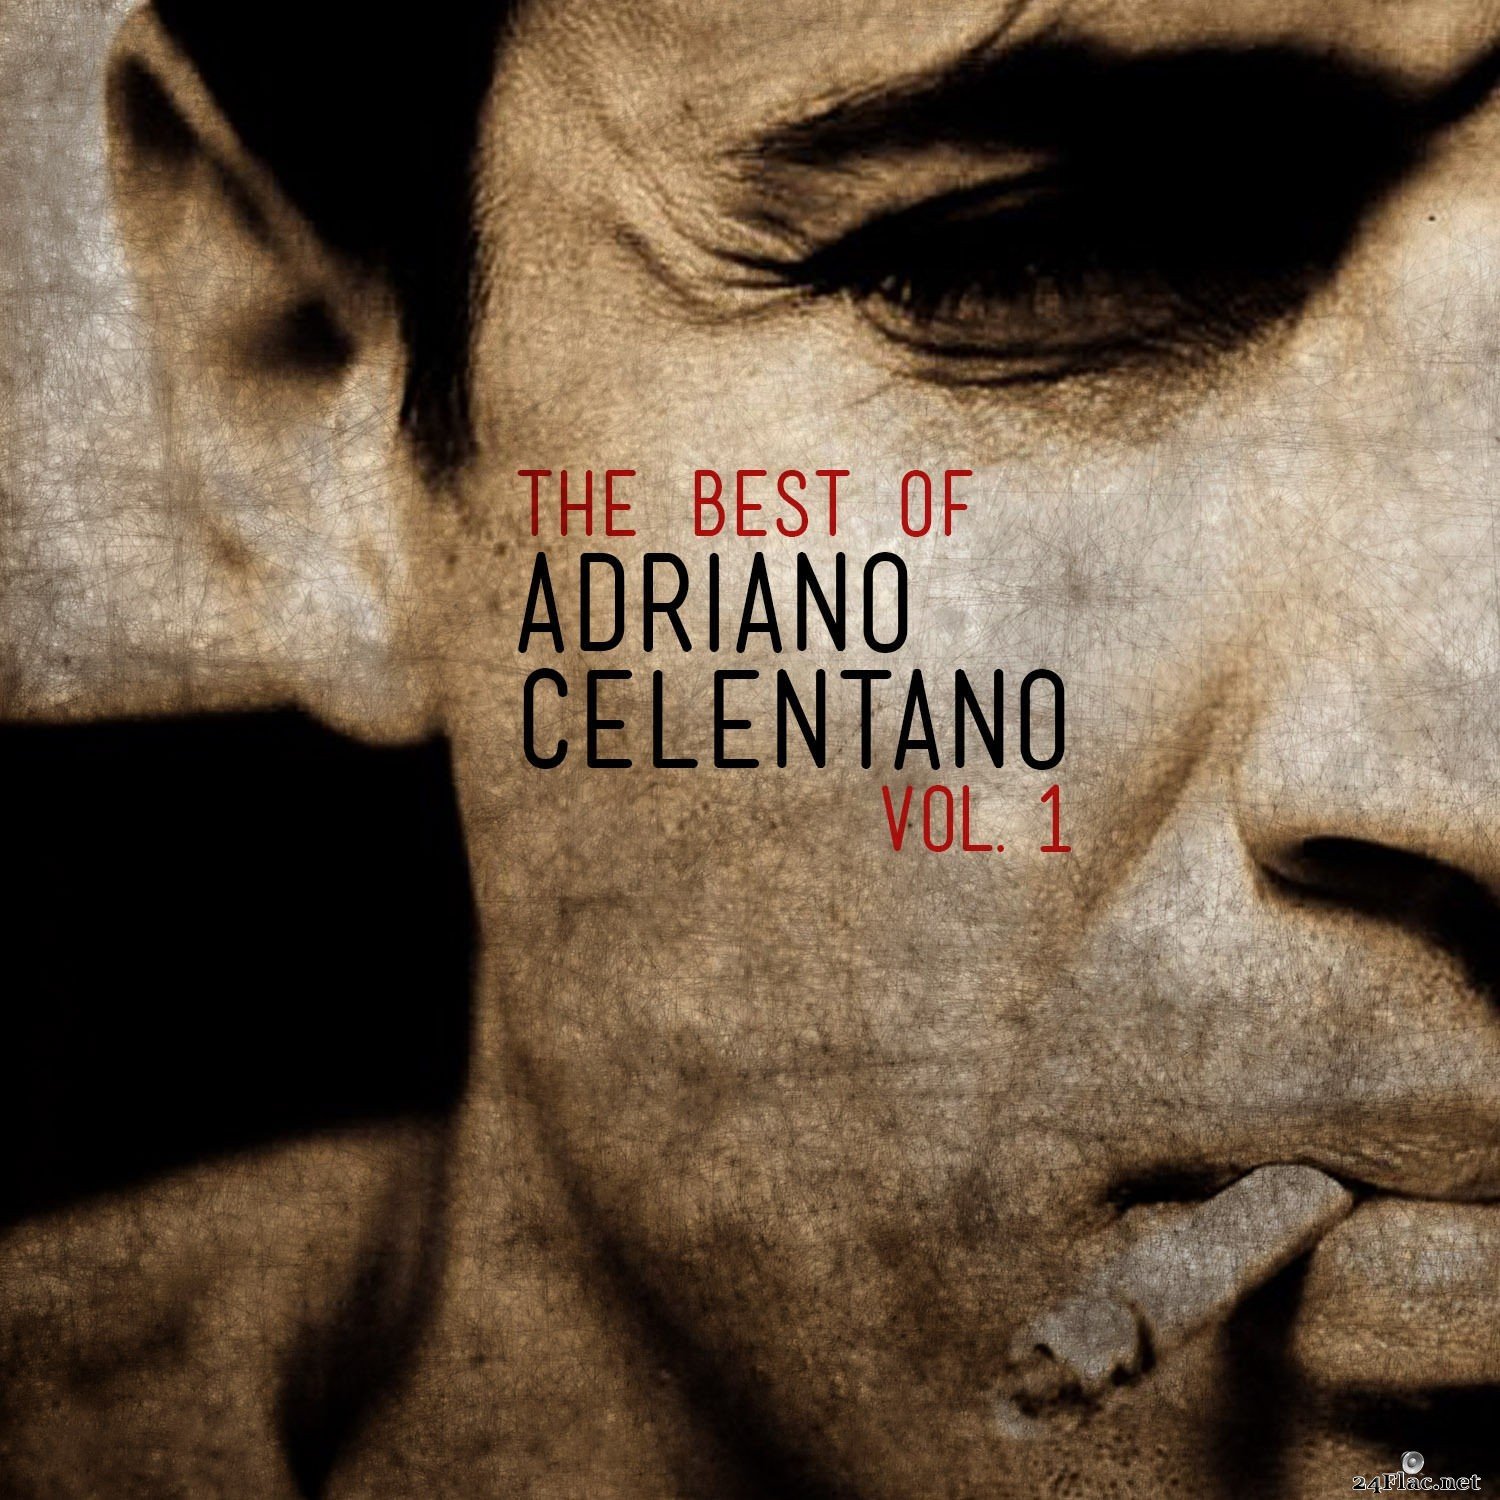 Adriano Celentano - The Best of Adriano Celentano, Vol. 1 (2012) Hi-Res